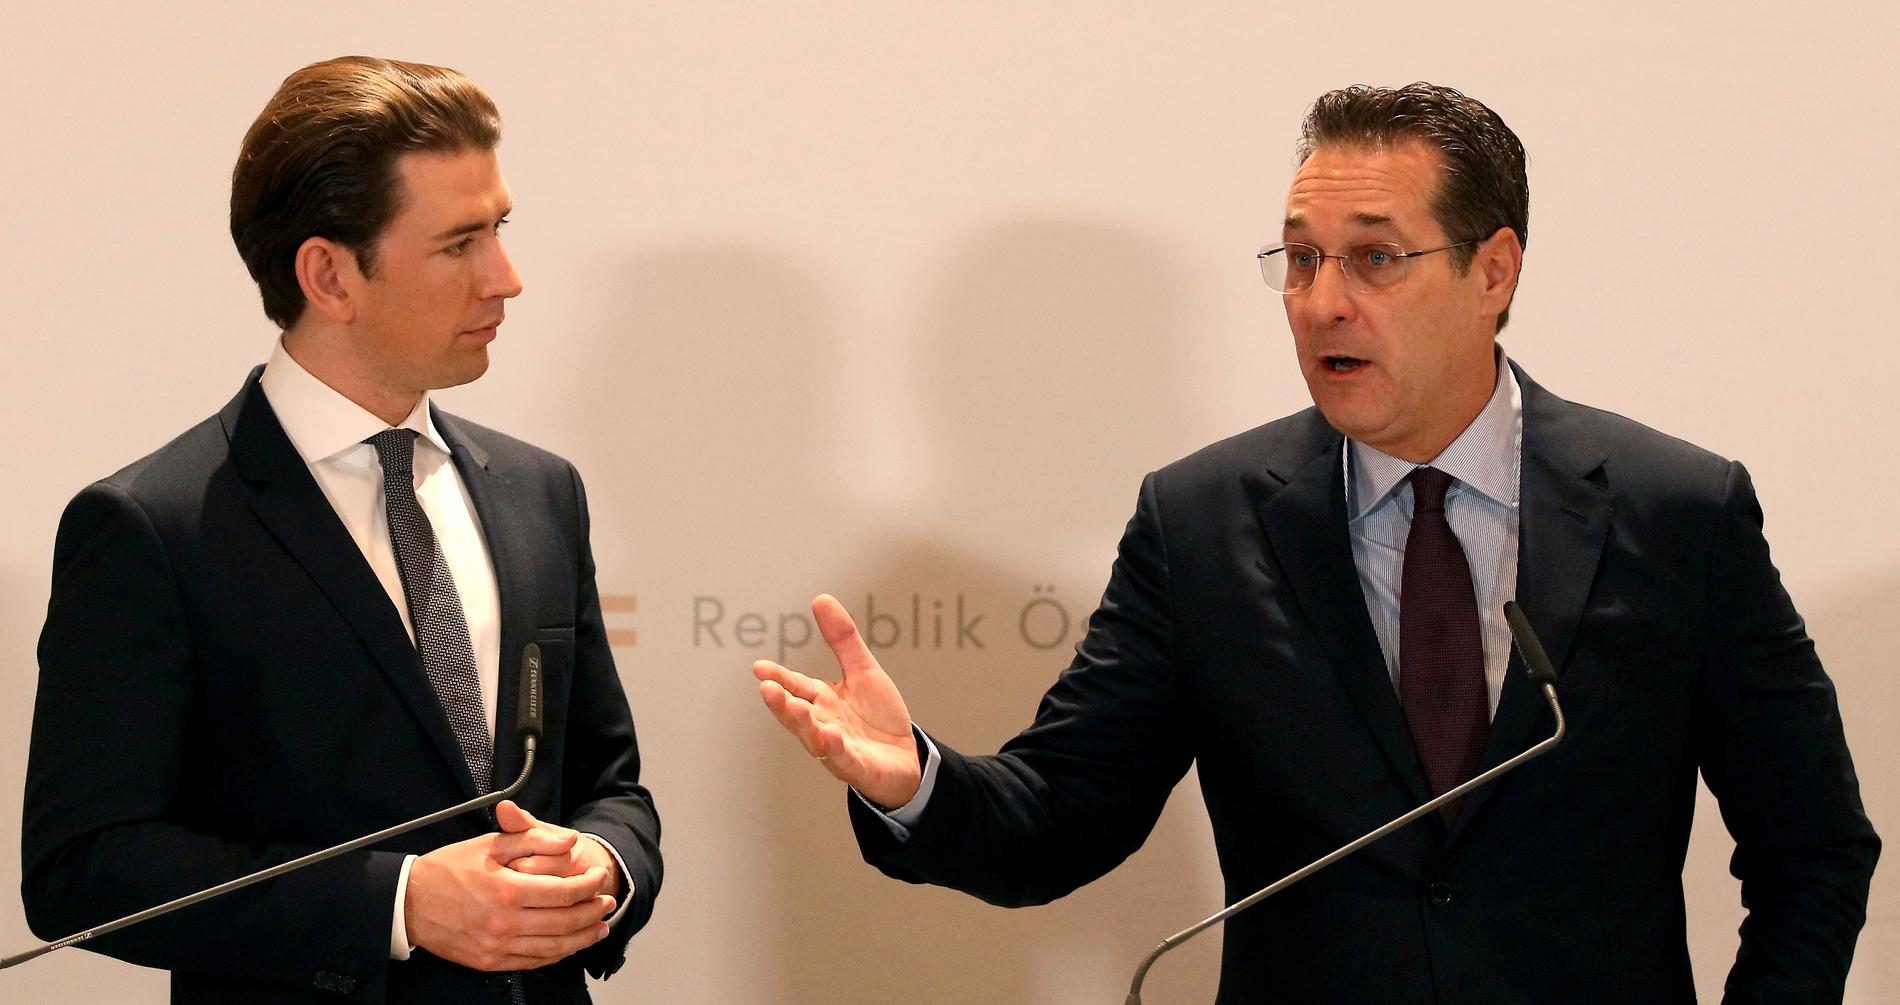 Österrikes förbundskansler Sebastian Kurz och dåvarande vicekanslern Heinz-Christian Strache innan skandalen.